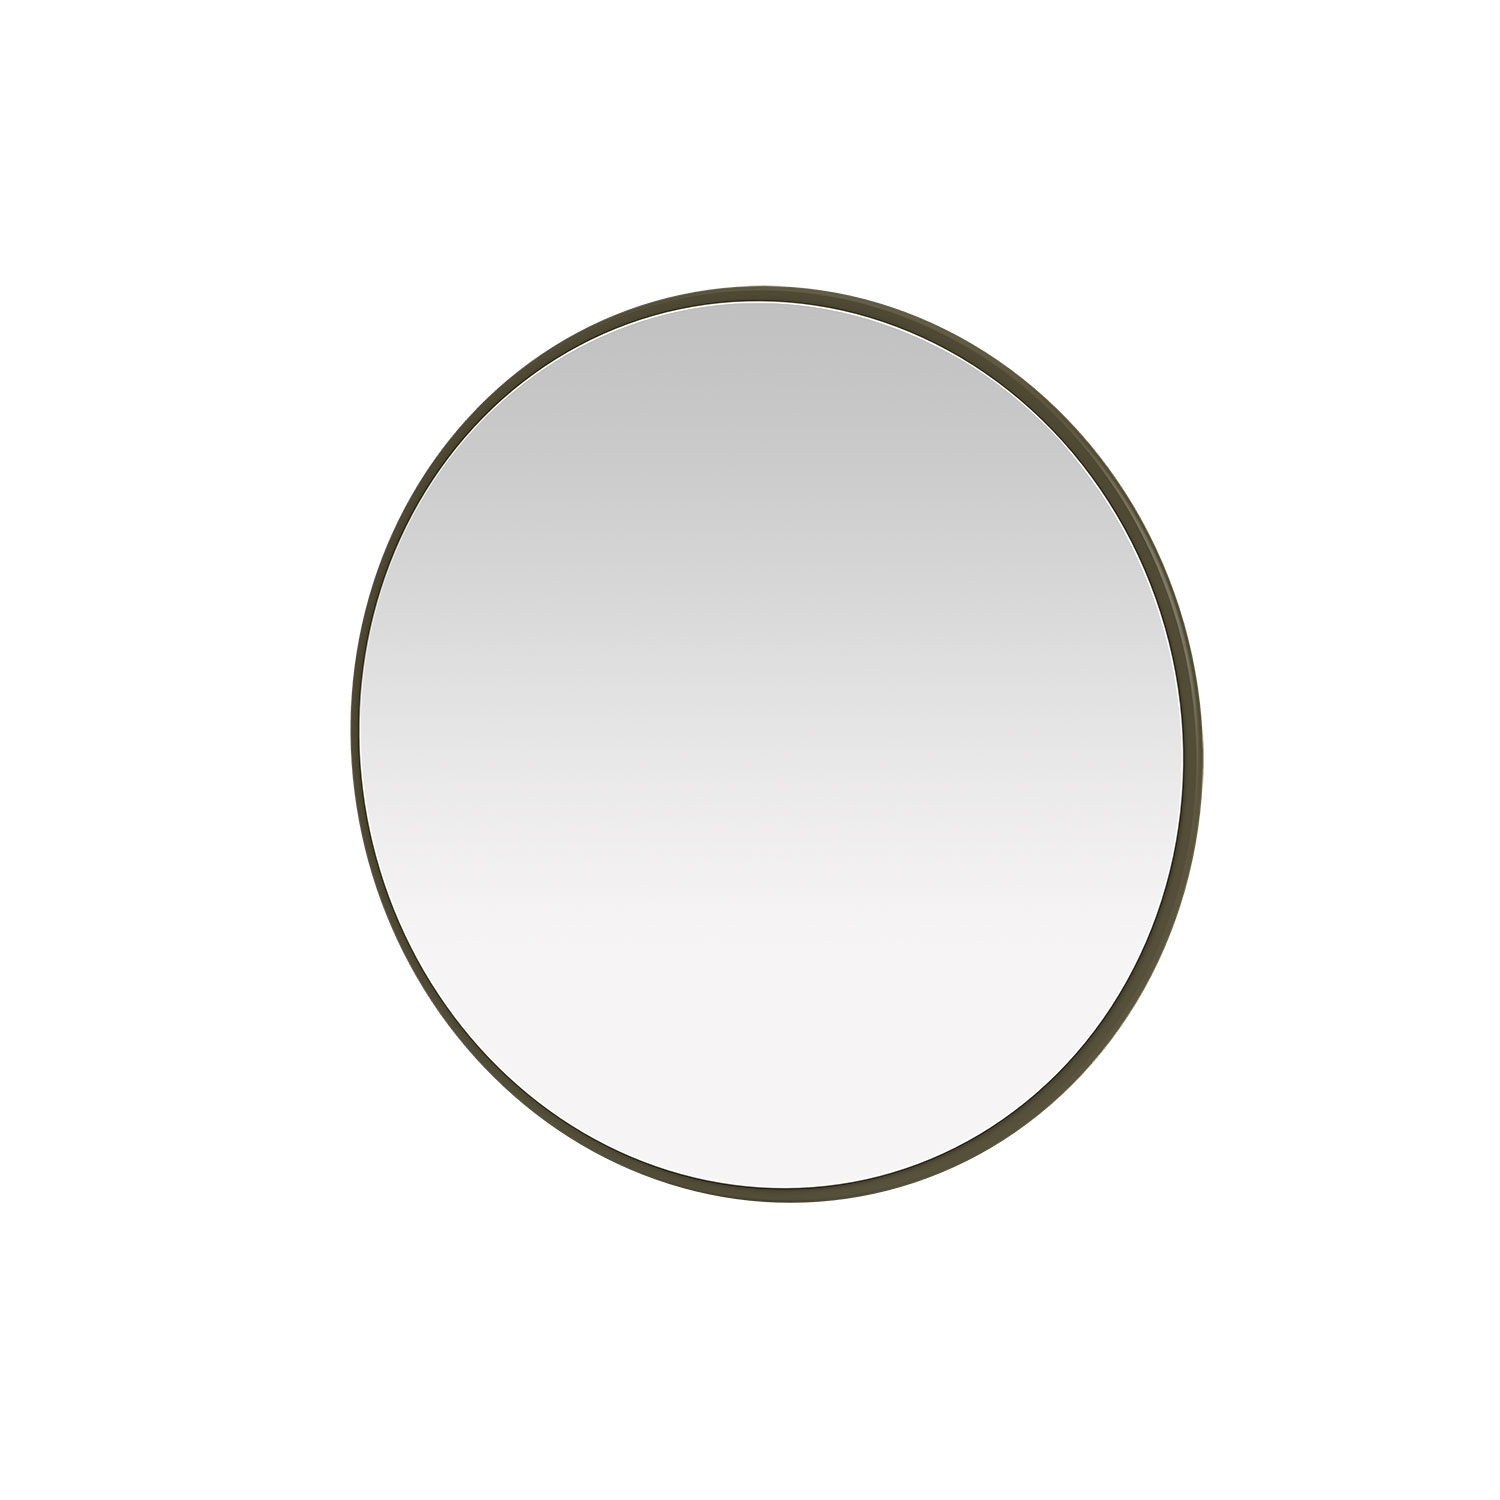 AROUND mirror, Oregano